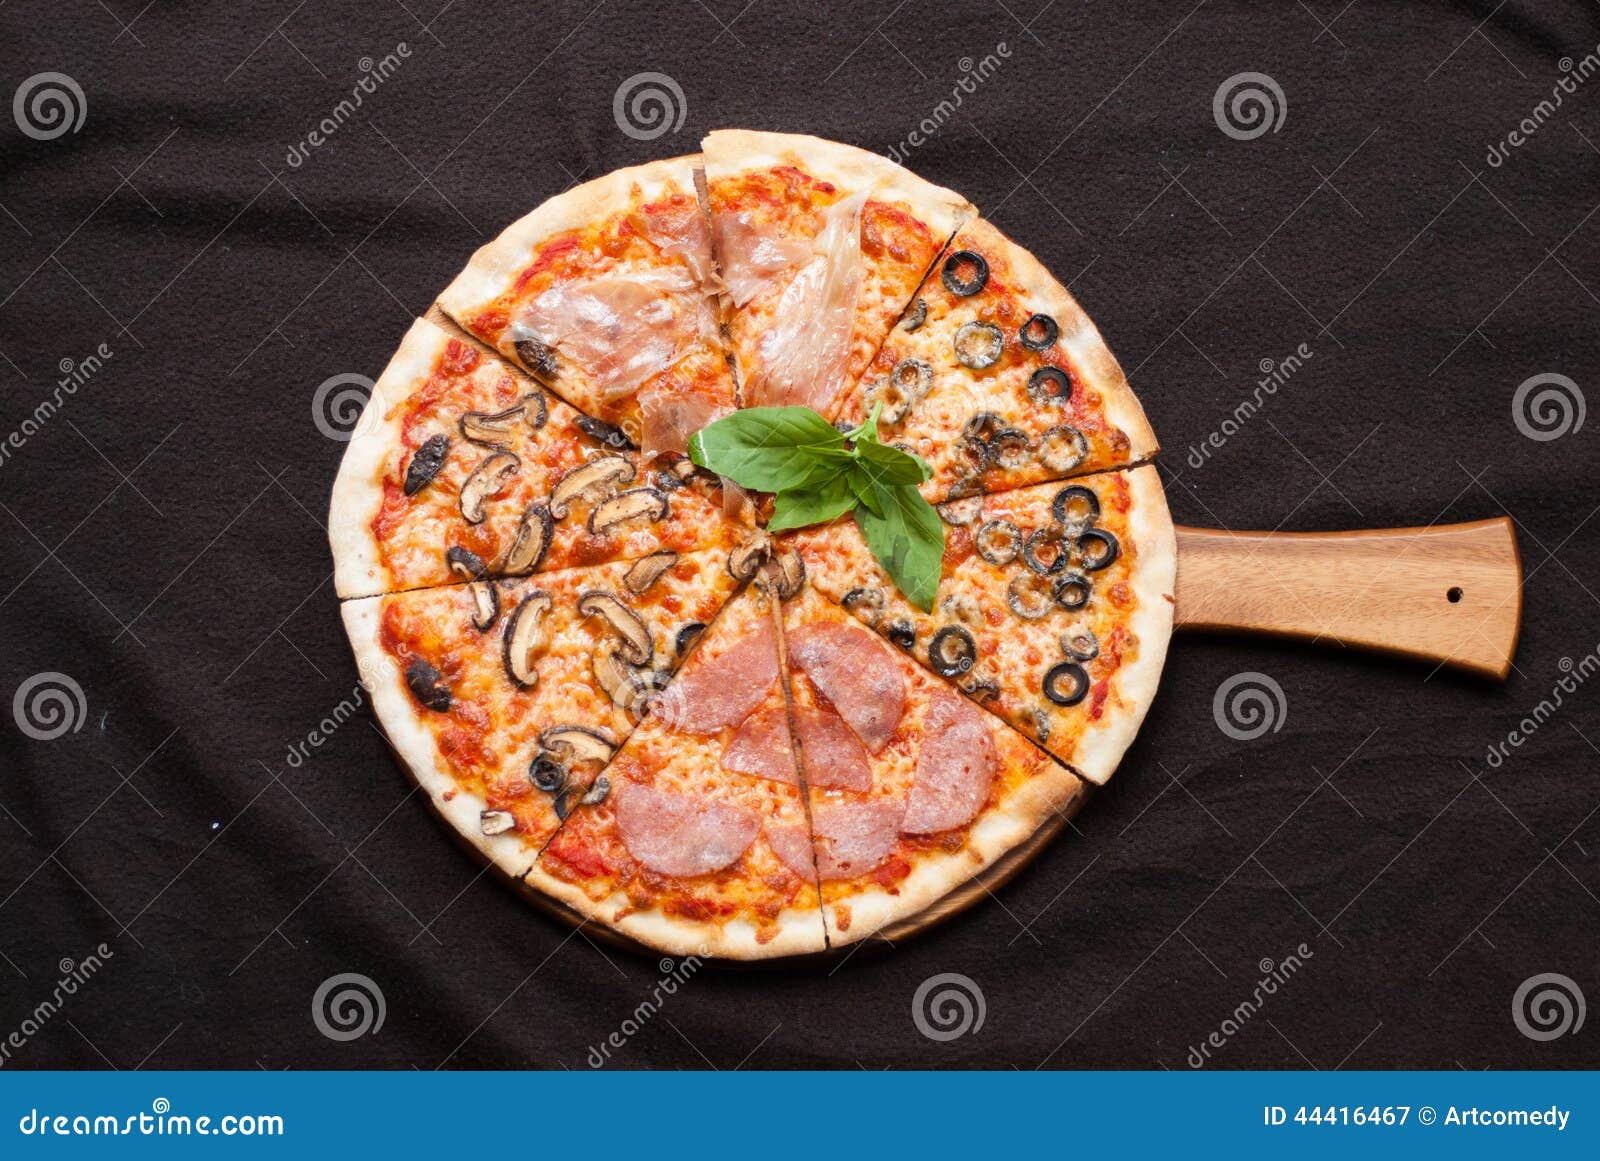 пицца четыре сезона quattro stagioni фото 88